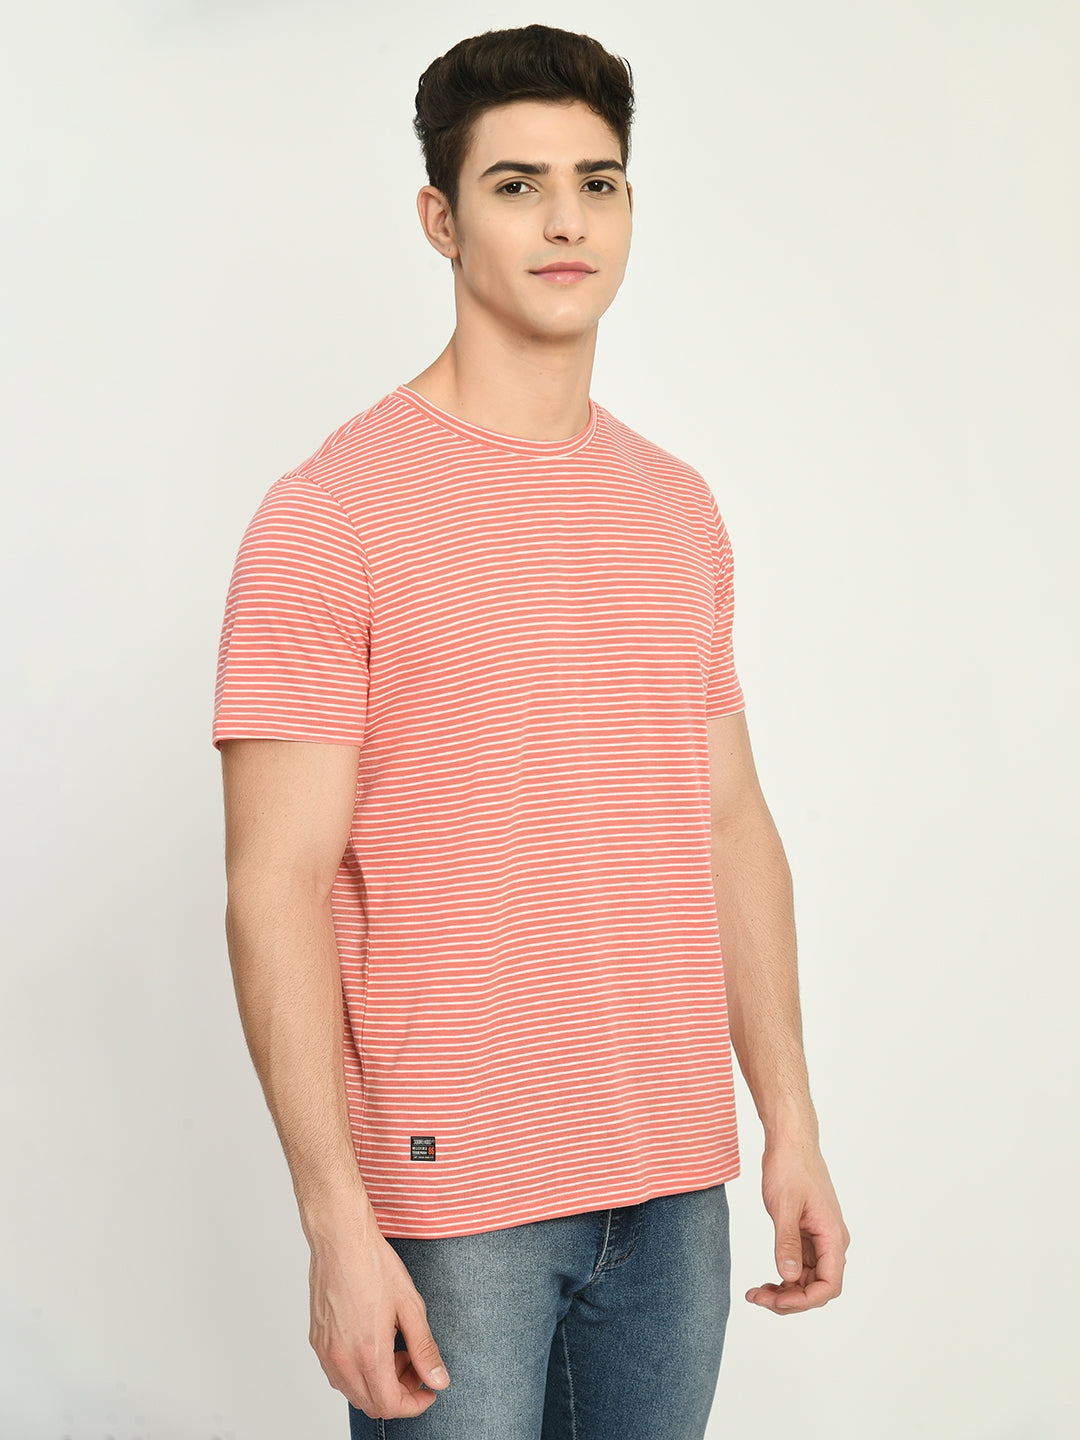 Men's Peach White Striped Knitted T-Shirt